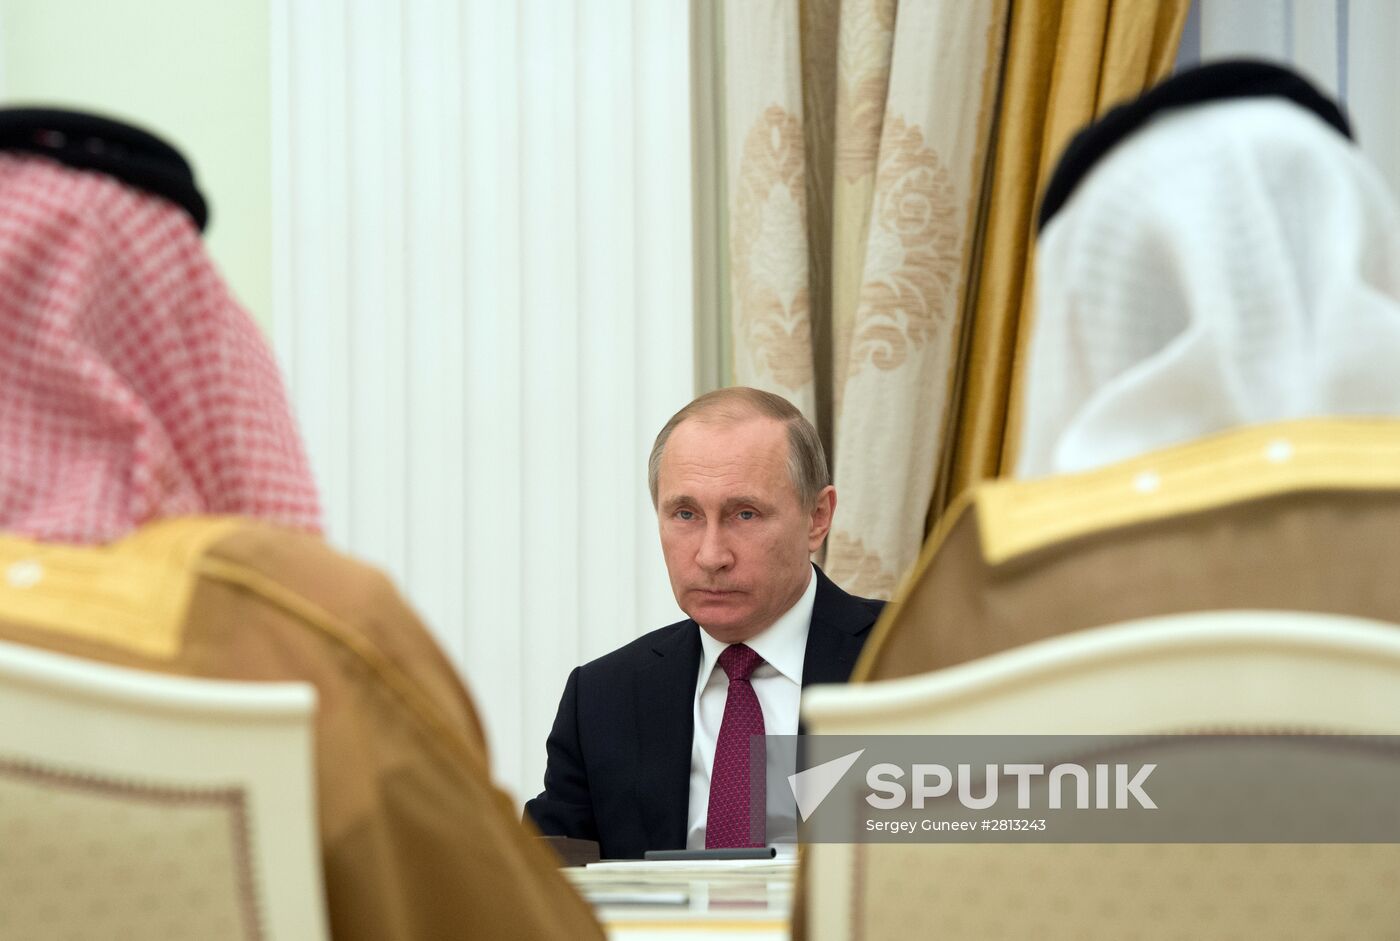 President Vladimir Putin meets with Crown Prince of Abu Dhabi Mohammed bin Zayed Al Nahyan